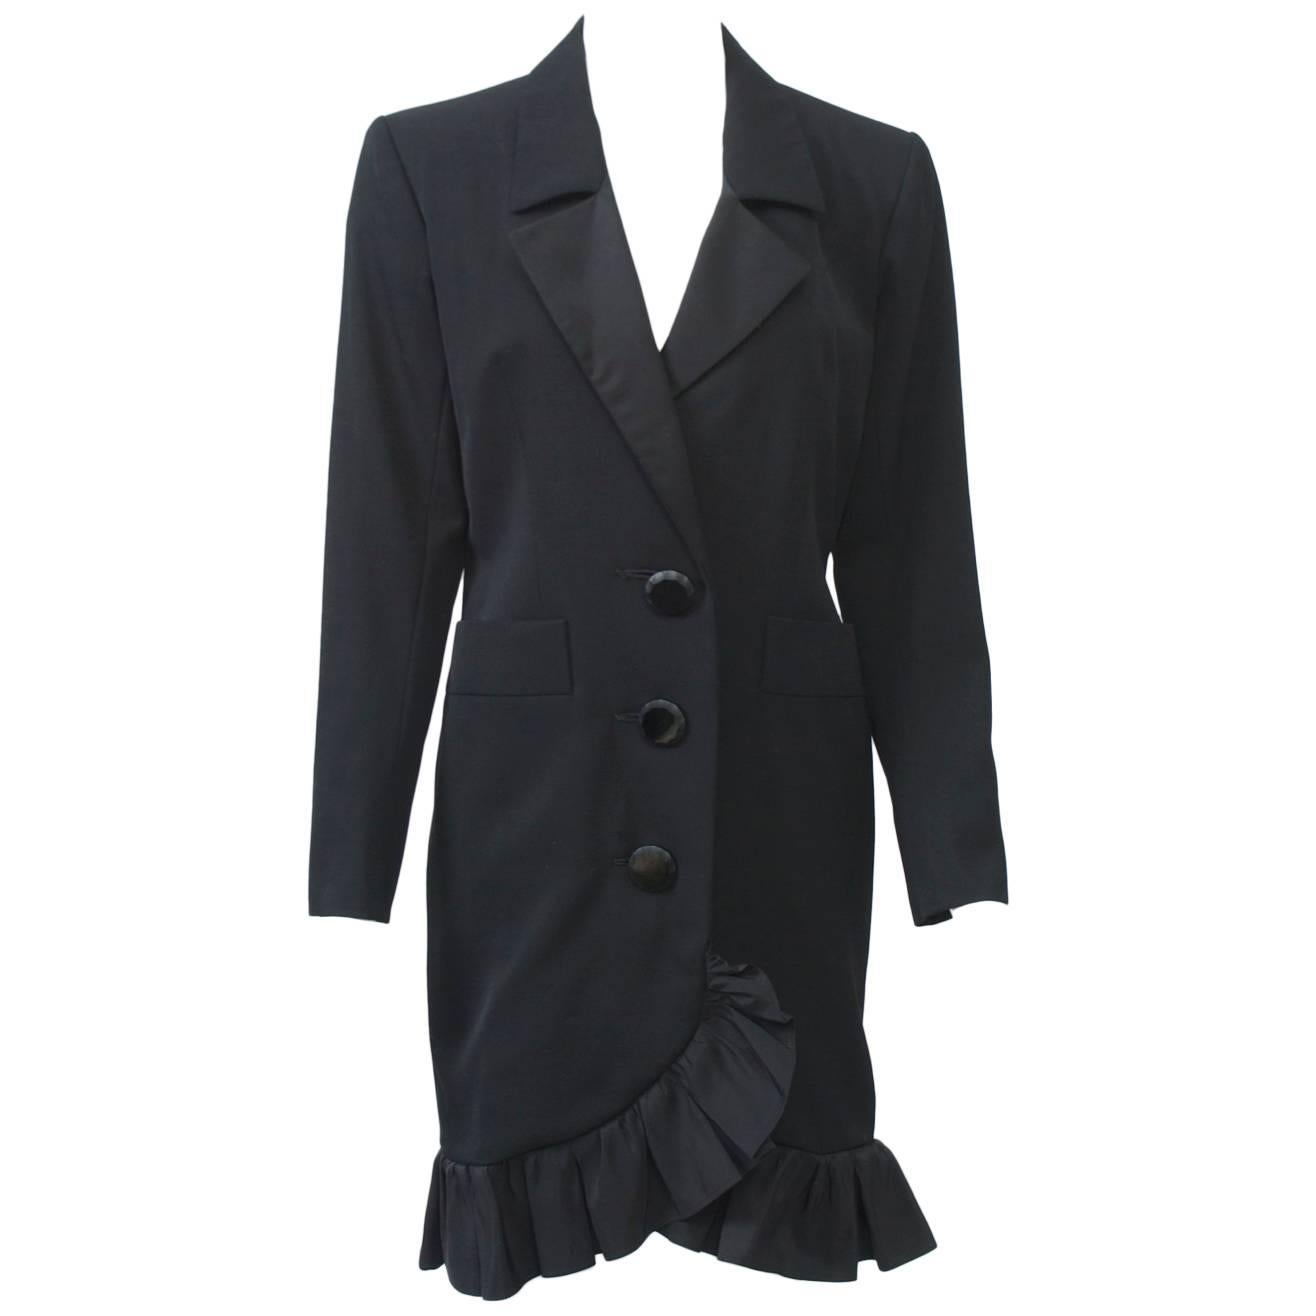 YSL Black Coat Dress with Ruffle